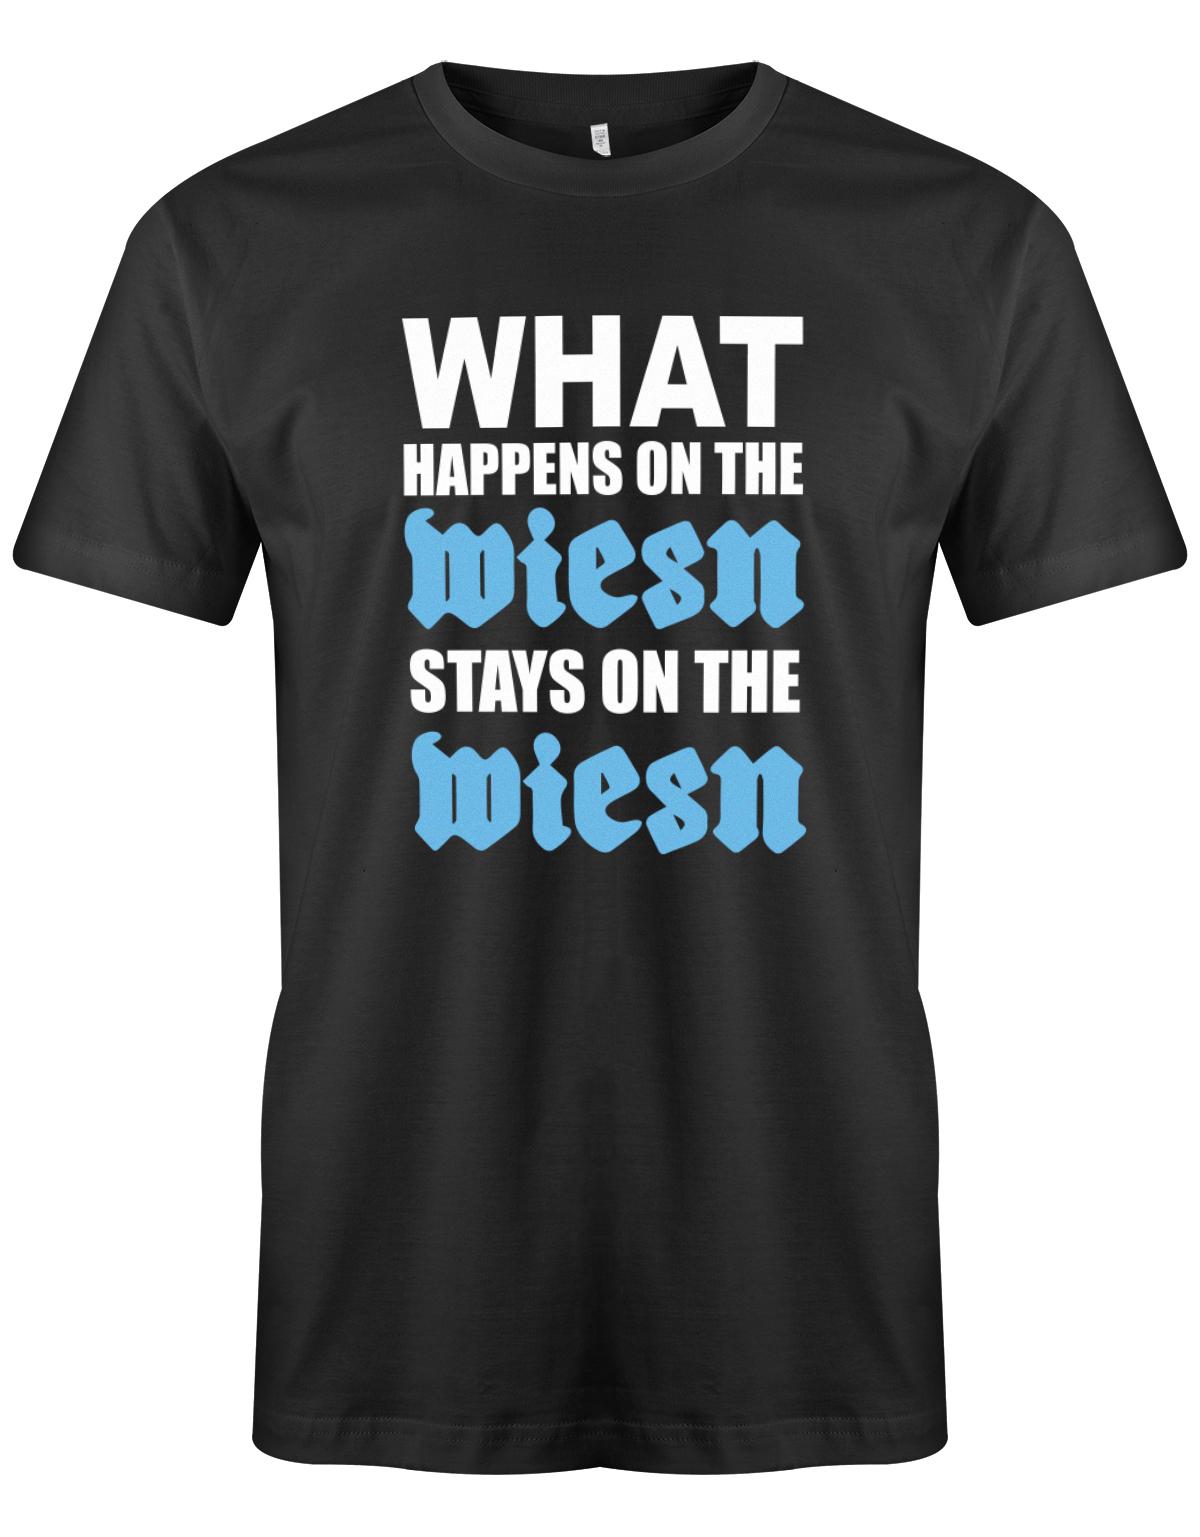 What-happens-on-the-wiesn-stay-on-the-wiesn-herren-shirt-schwarz